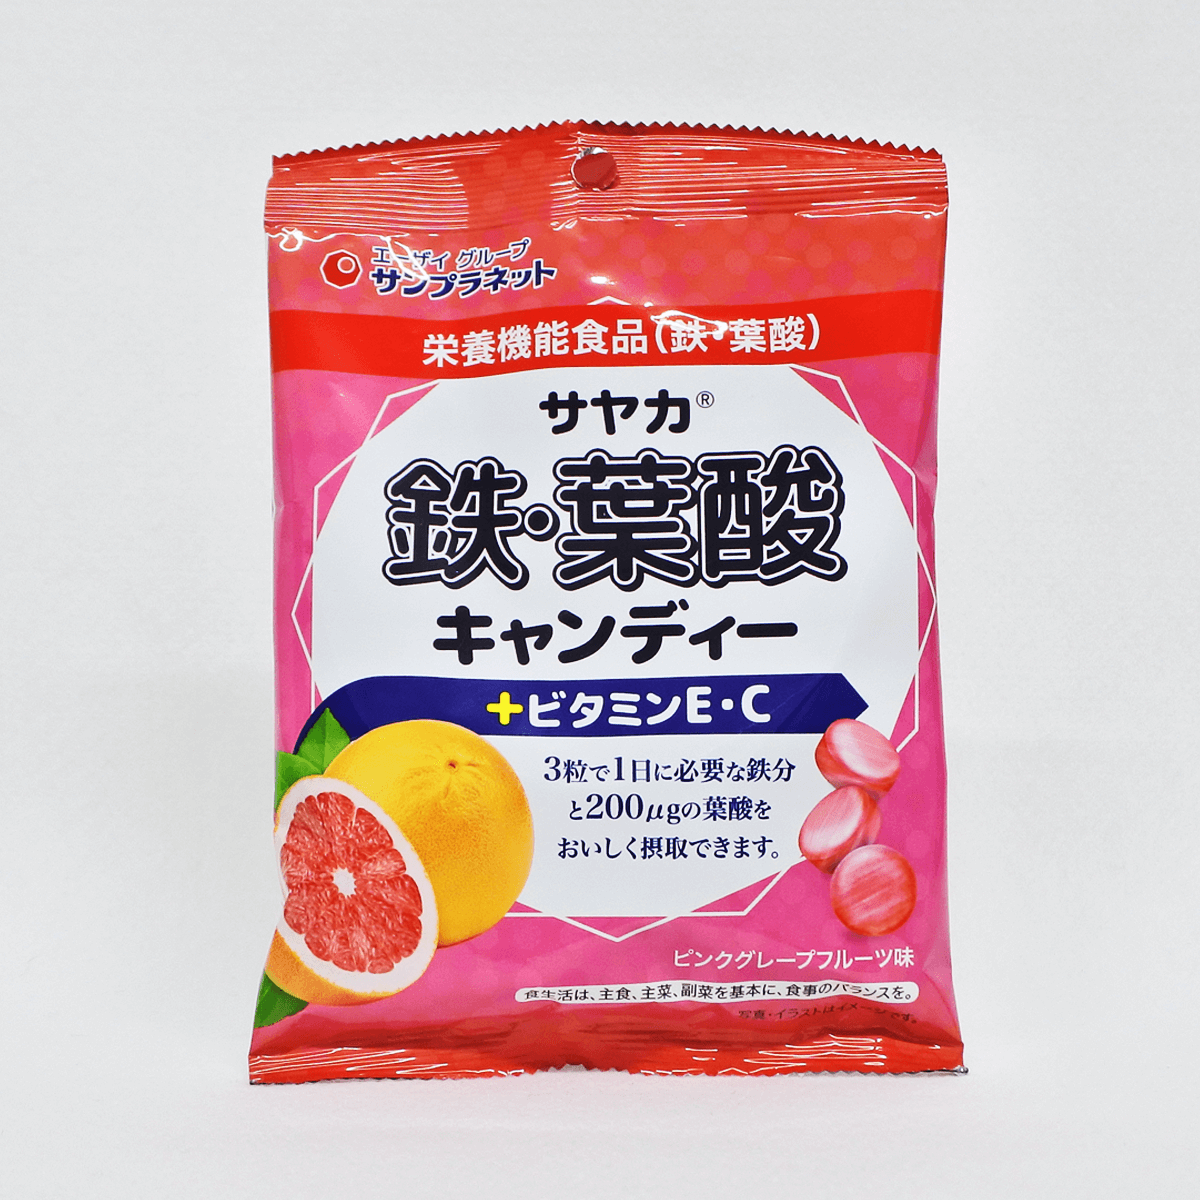 Sunplanet 铁・叶酸糖果 葡萄柚口味 65g